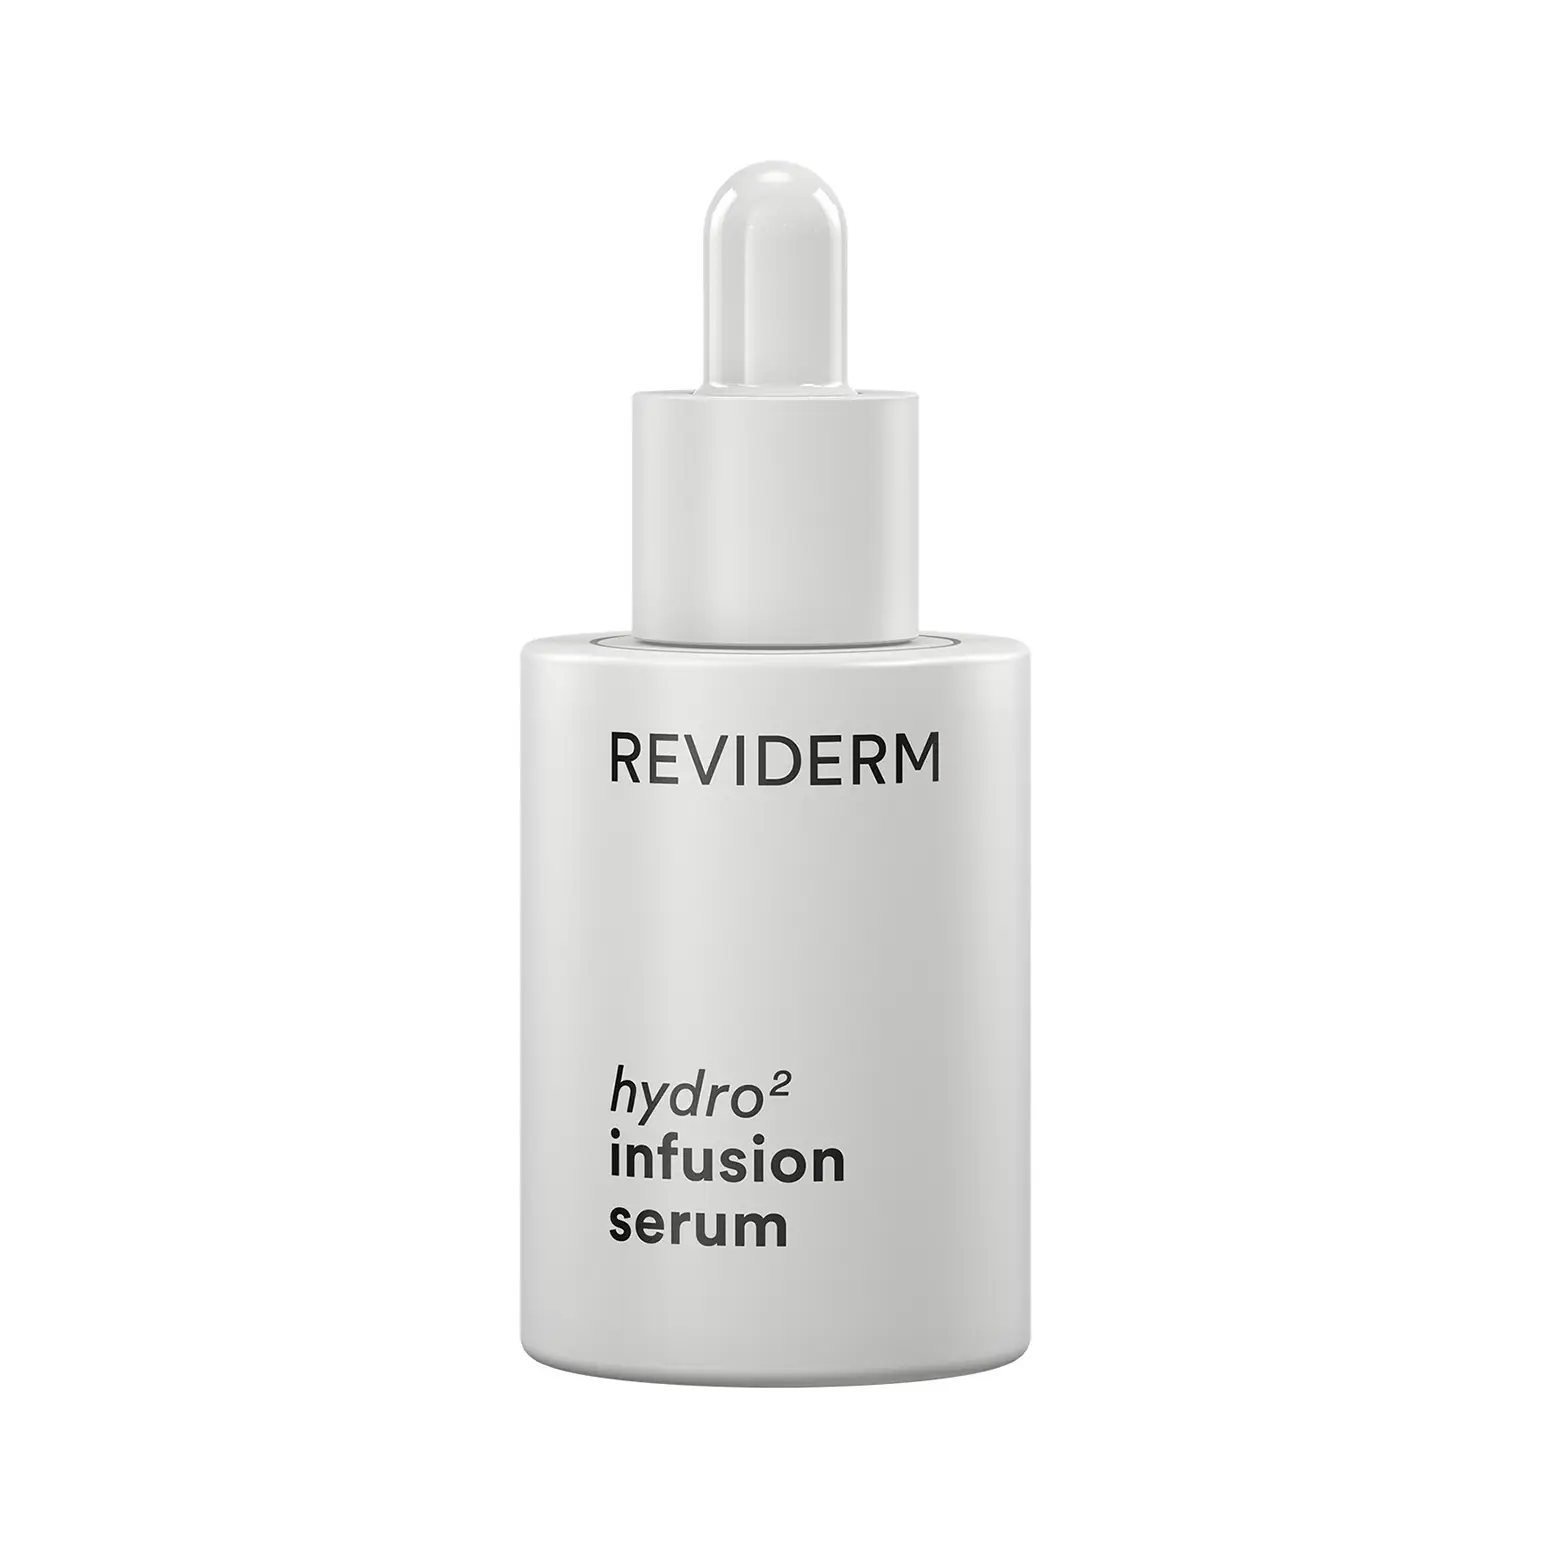 Reviderm Hydro2 infusion Serum huidverzorging